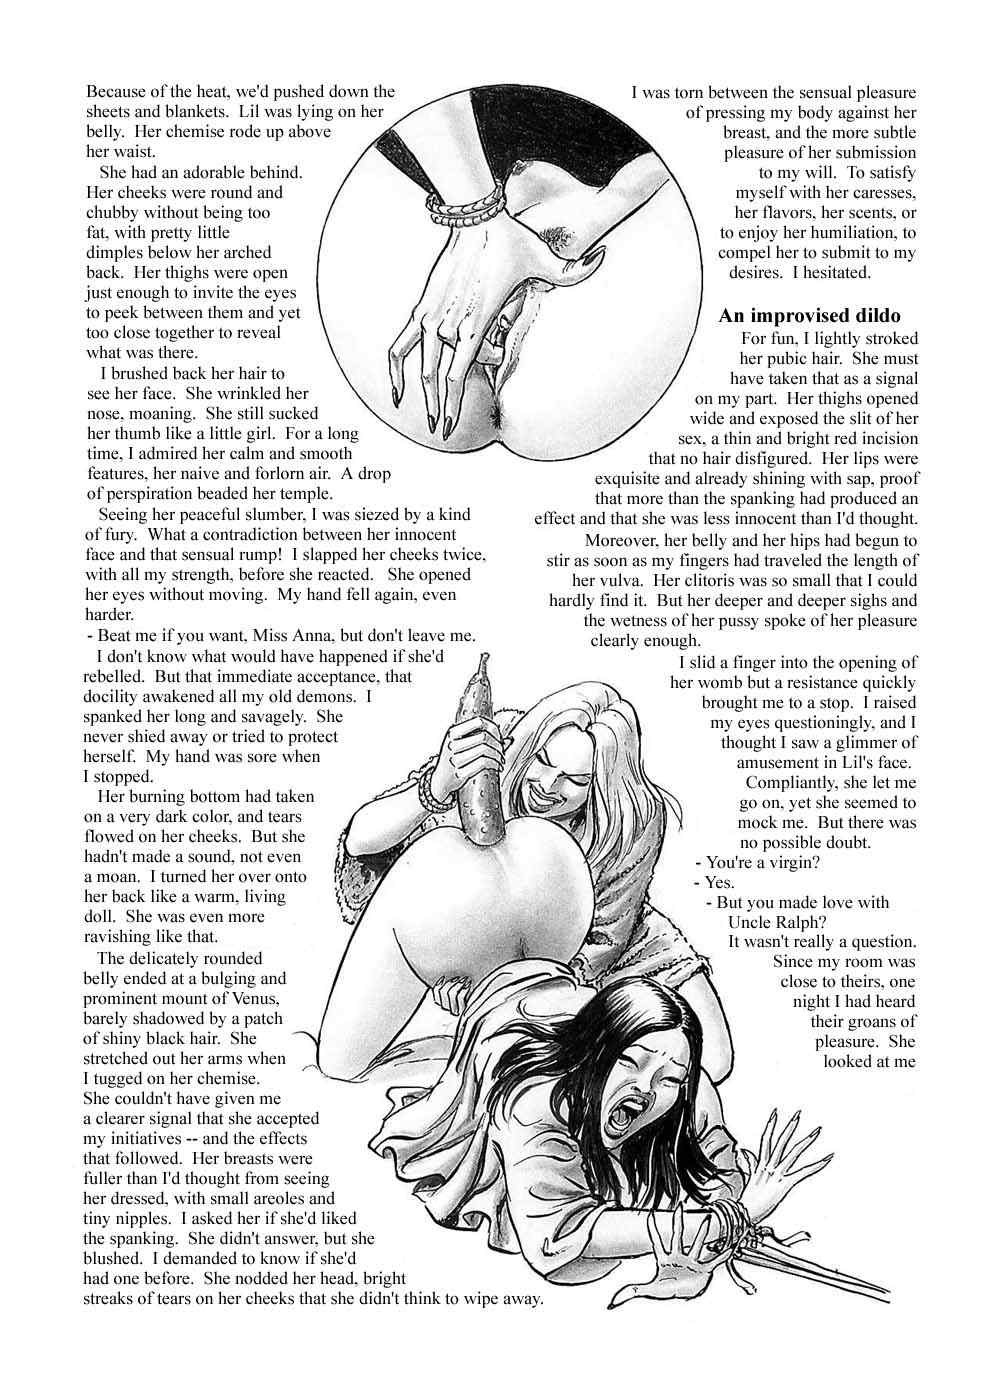 Historias eróticas sexuales bdsm ilustradas
 #69676974